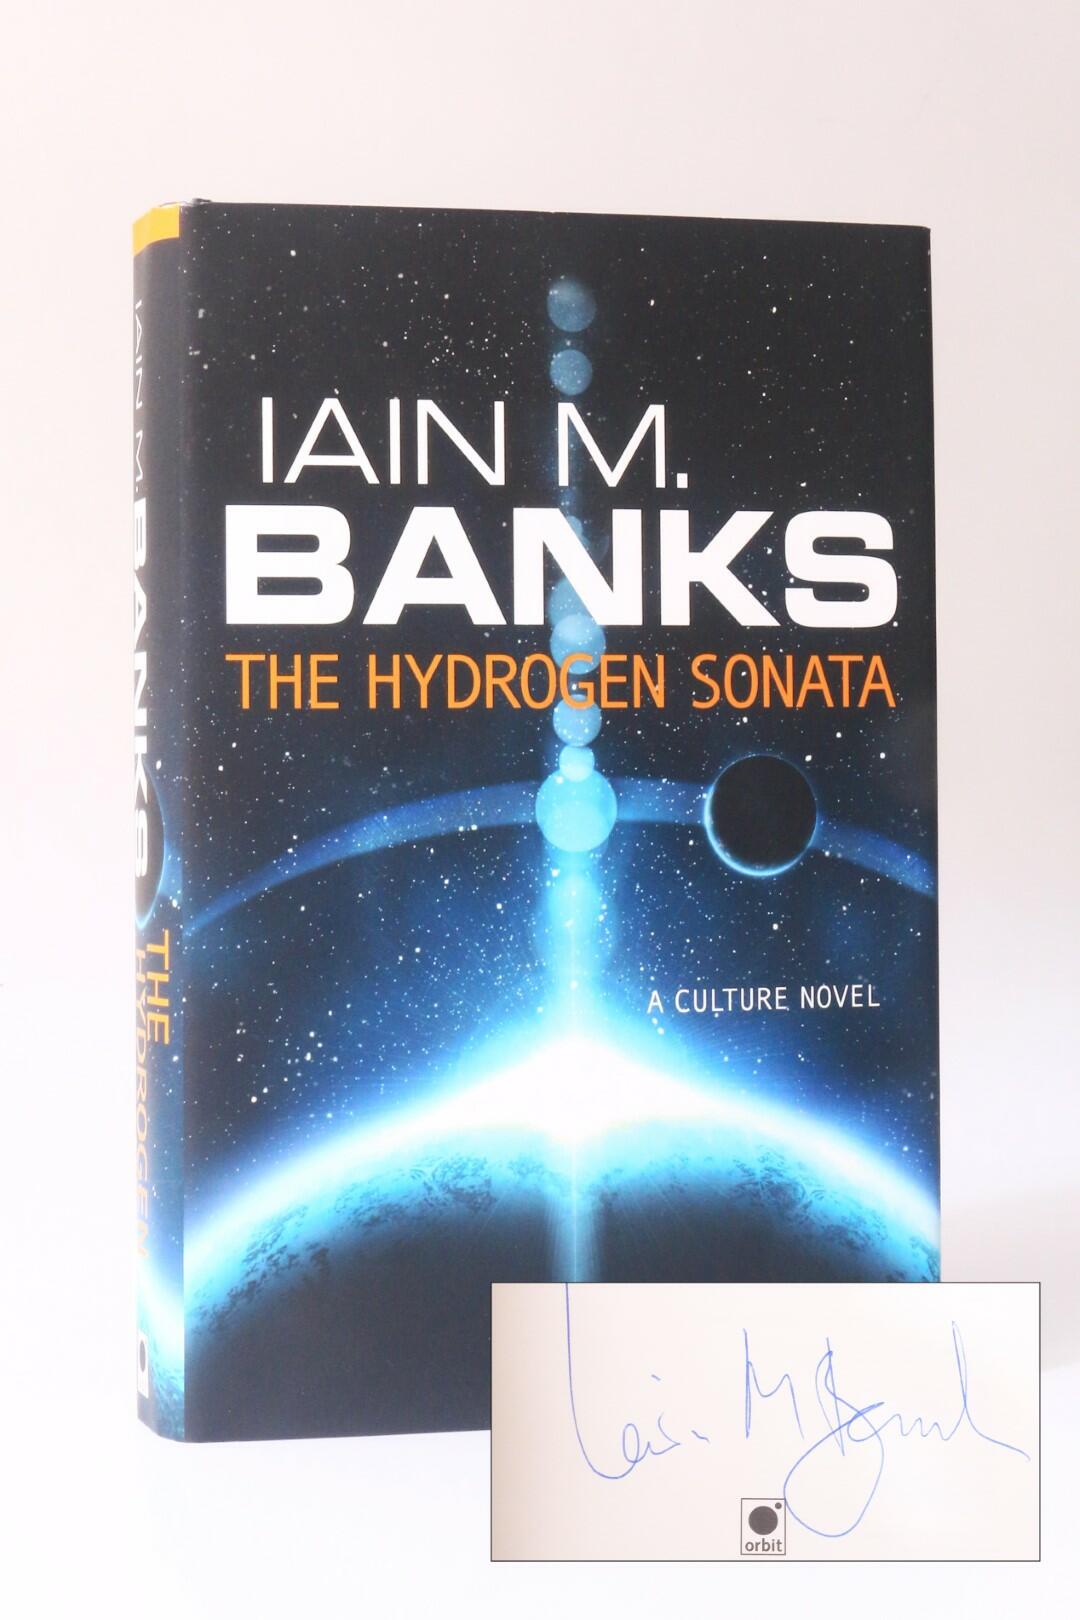 Iain M. Banks - The Hydrogen Sonata - Orbit, 2012, Signed First Edition.